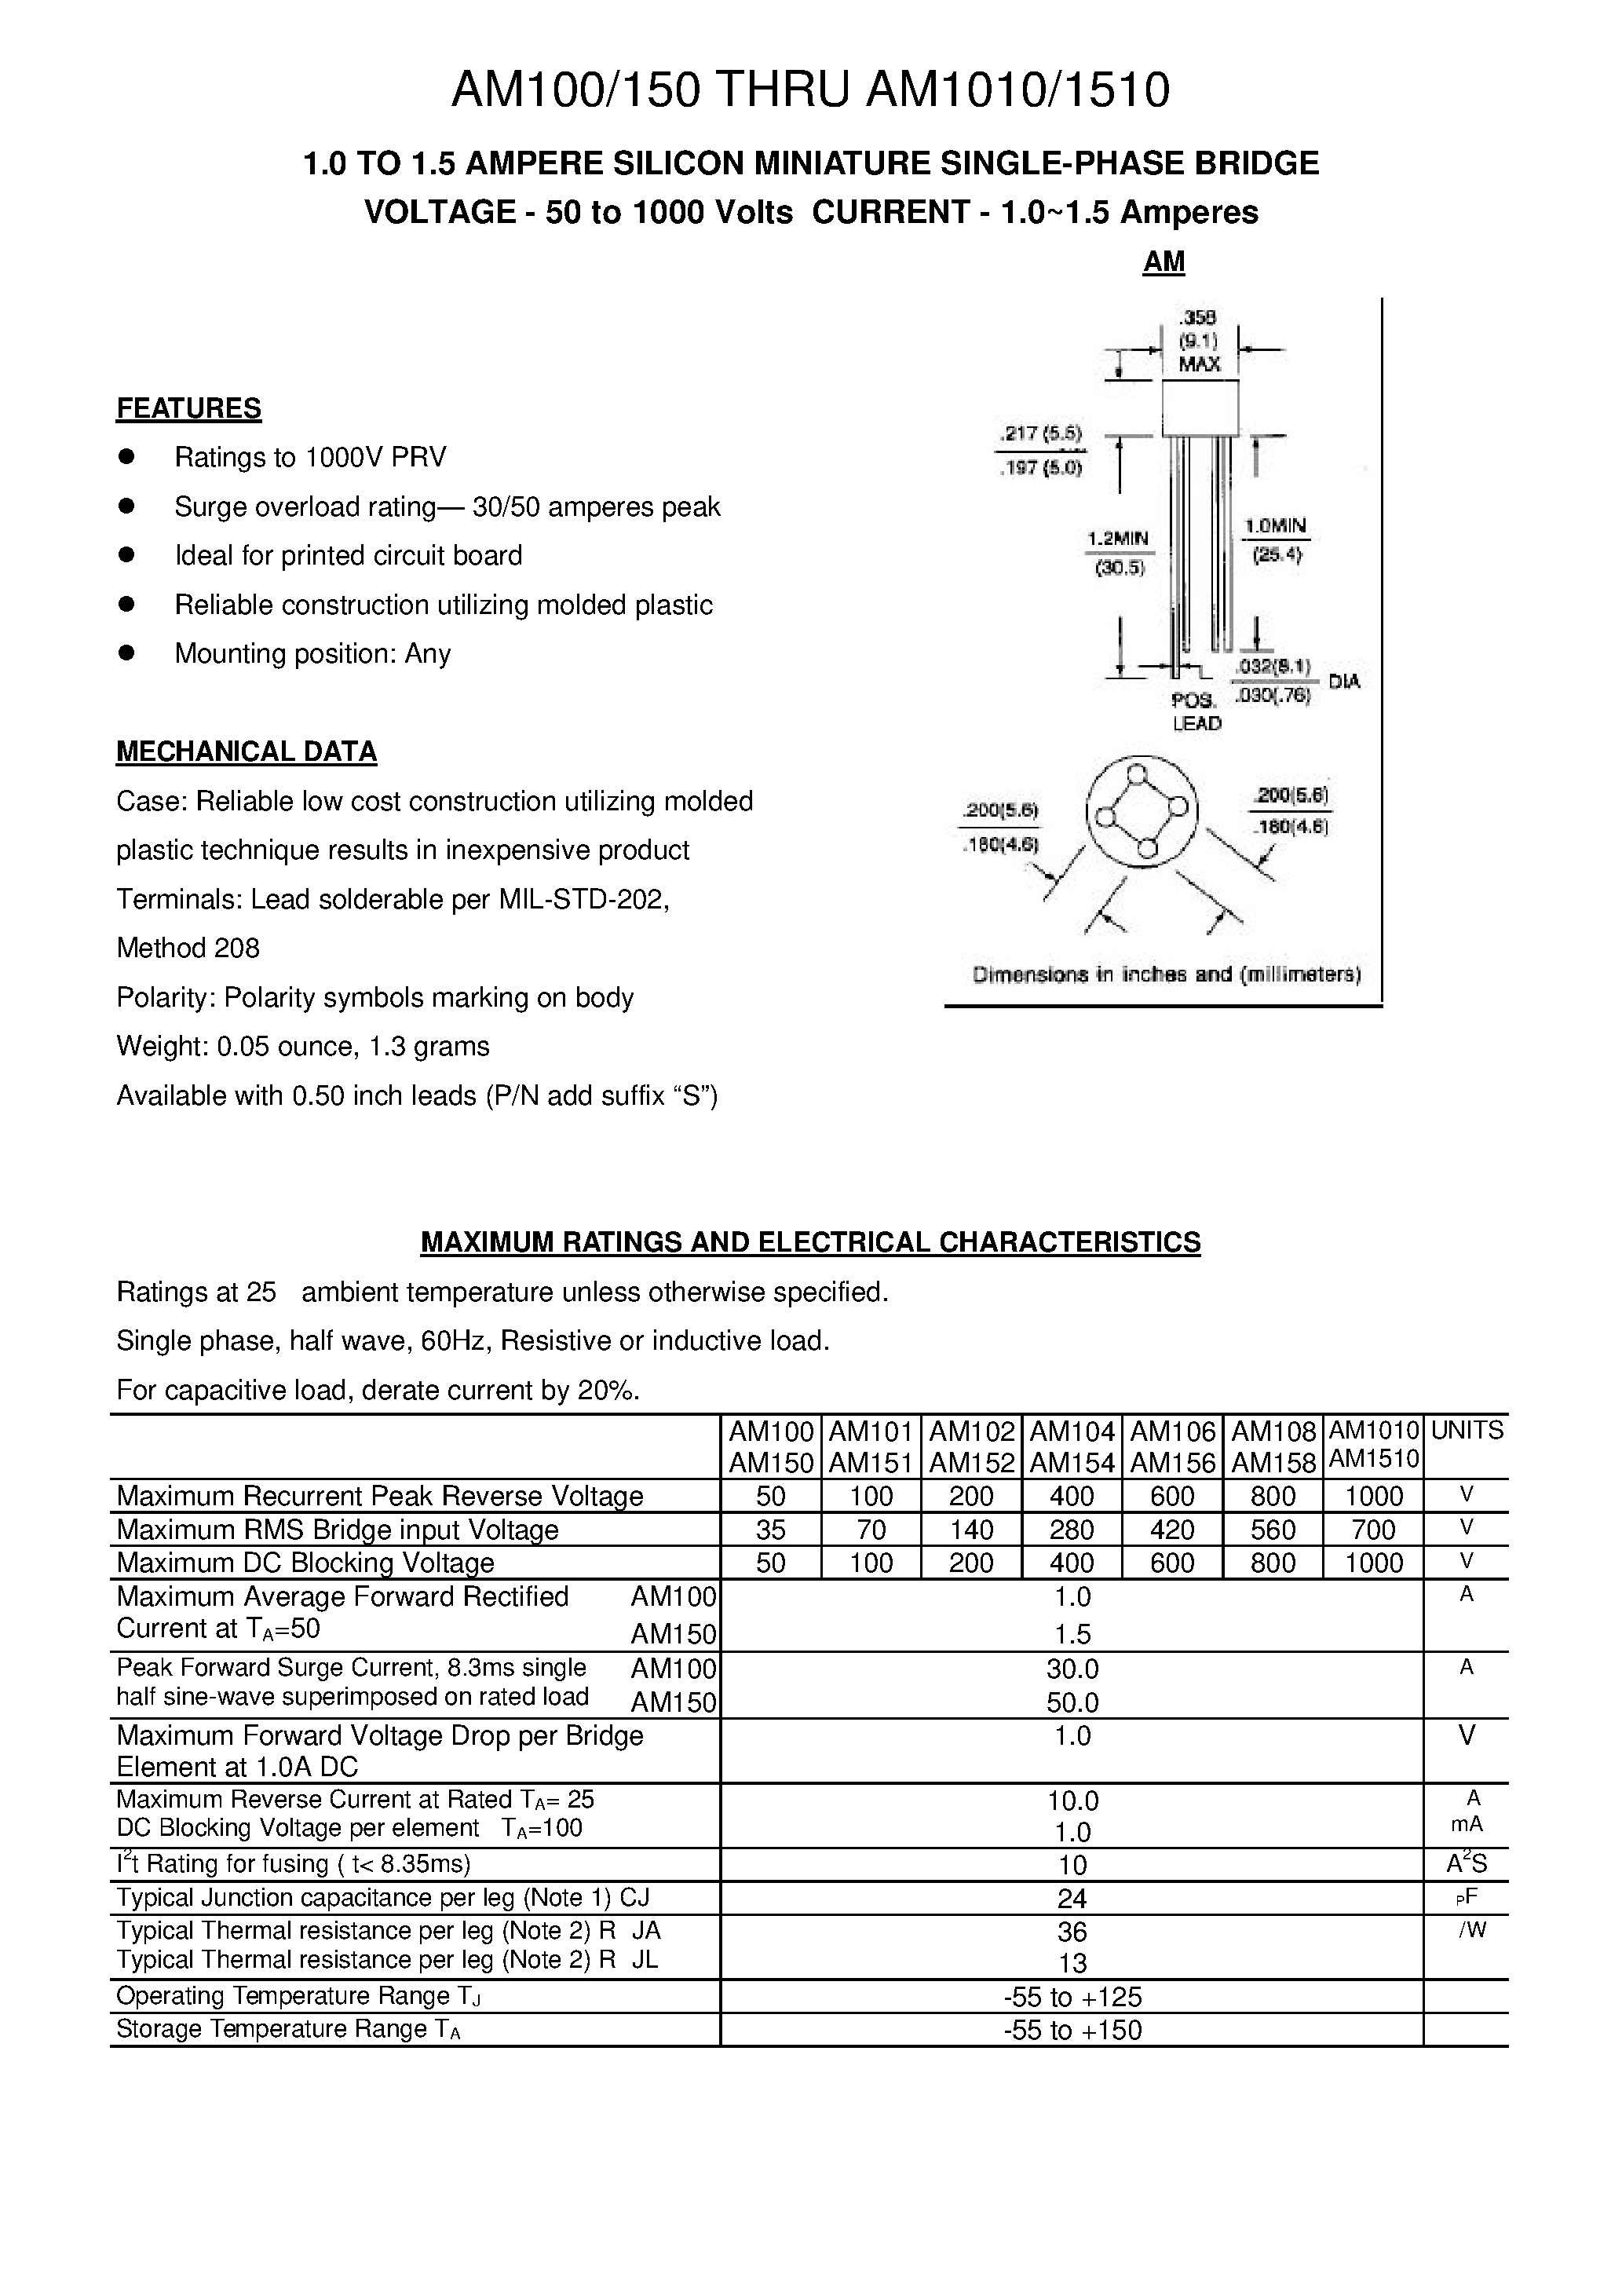 Datasheet AM104 - 1.0 TO 1.5 AMPERE SILICON MINIATURE SINGLE-PHASE BRIDGE page 1